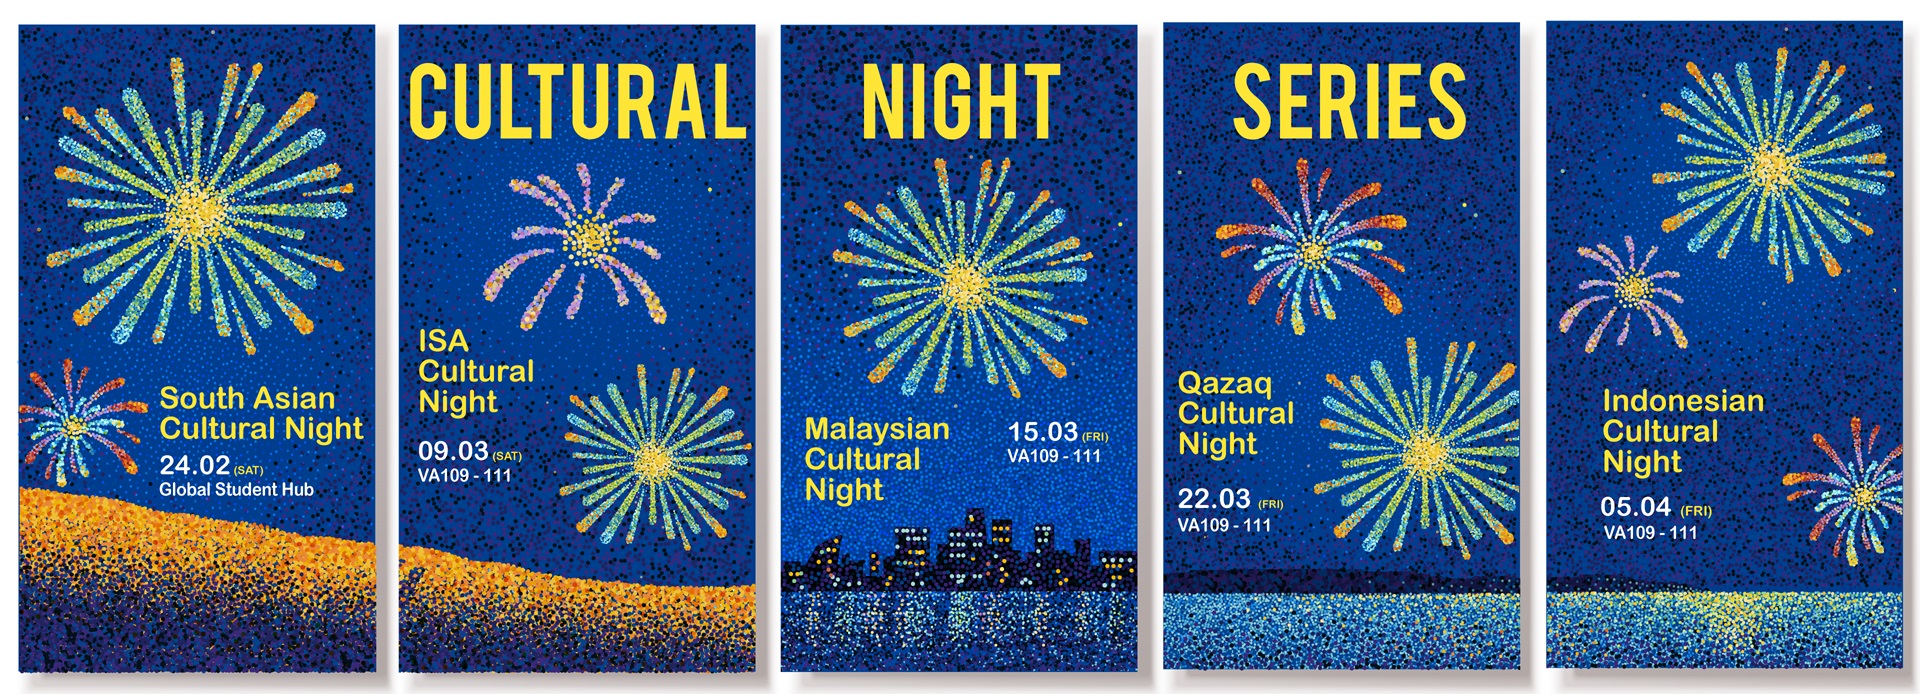 Cultural-Night-Series-herobanner-3840X1388px-rev2